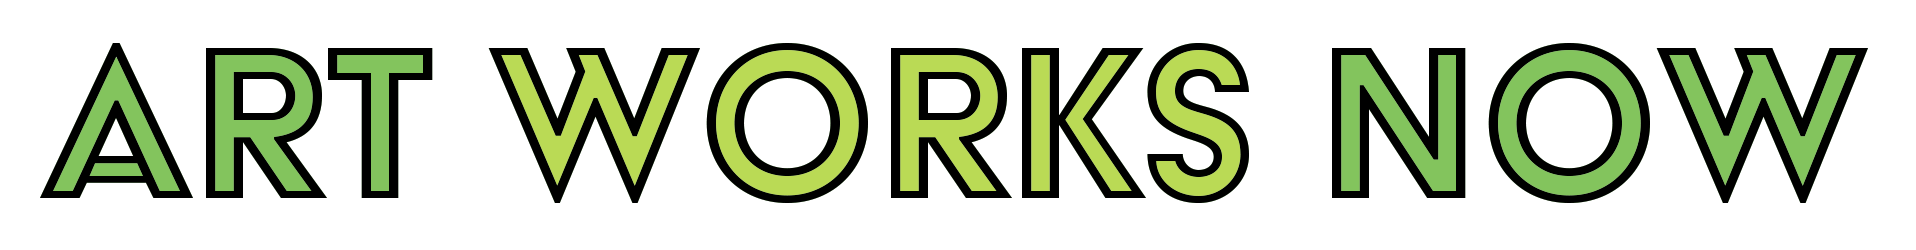 Art Works Now logo